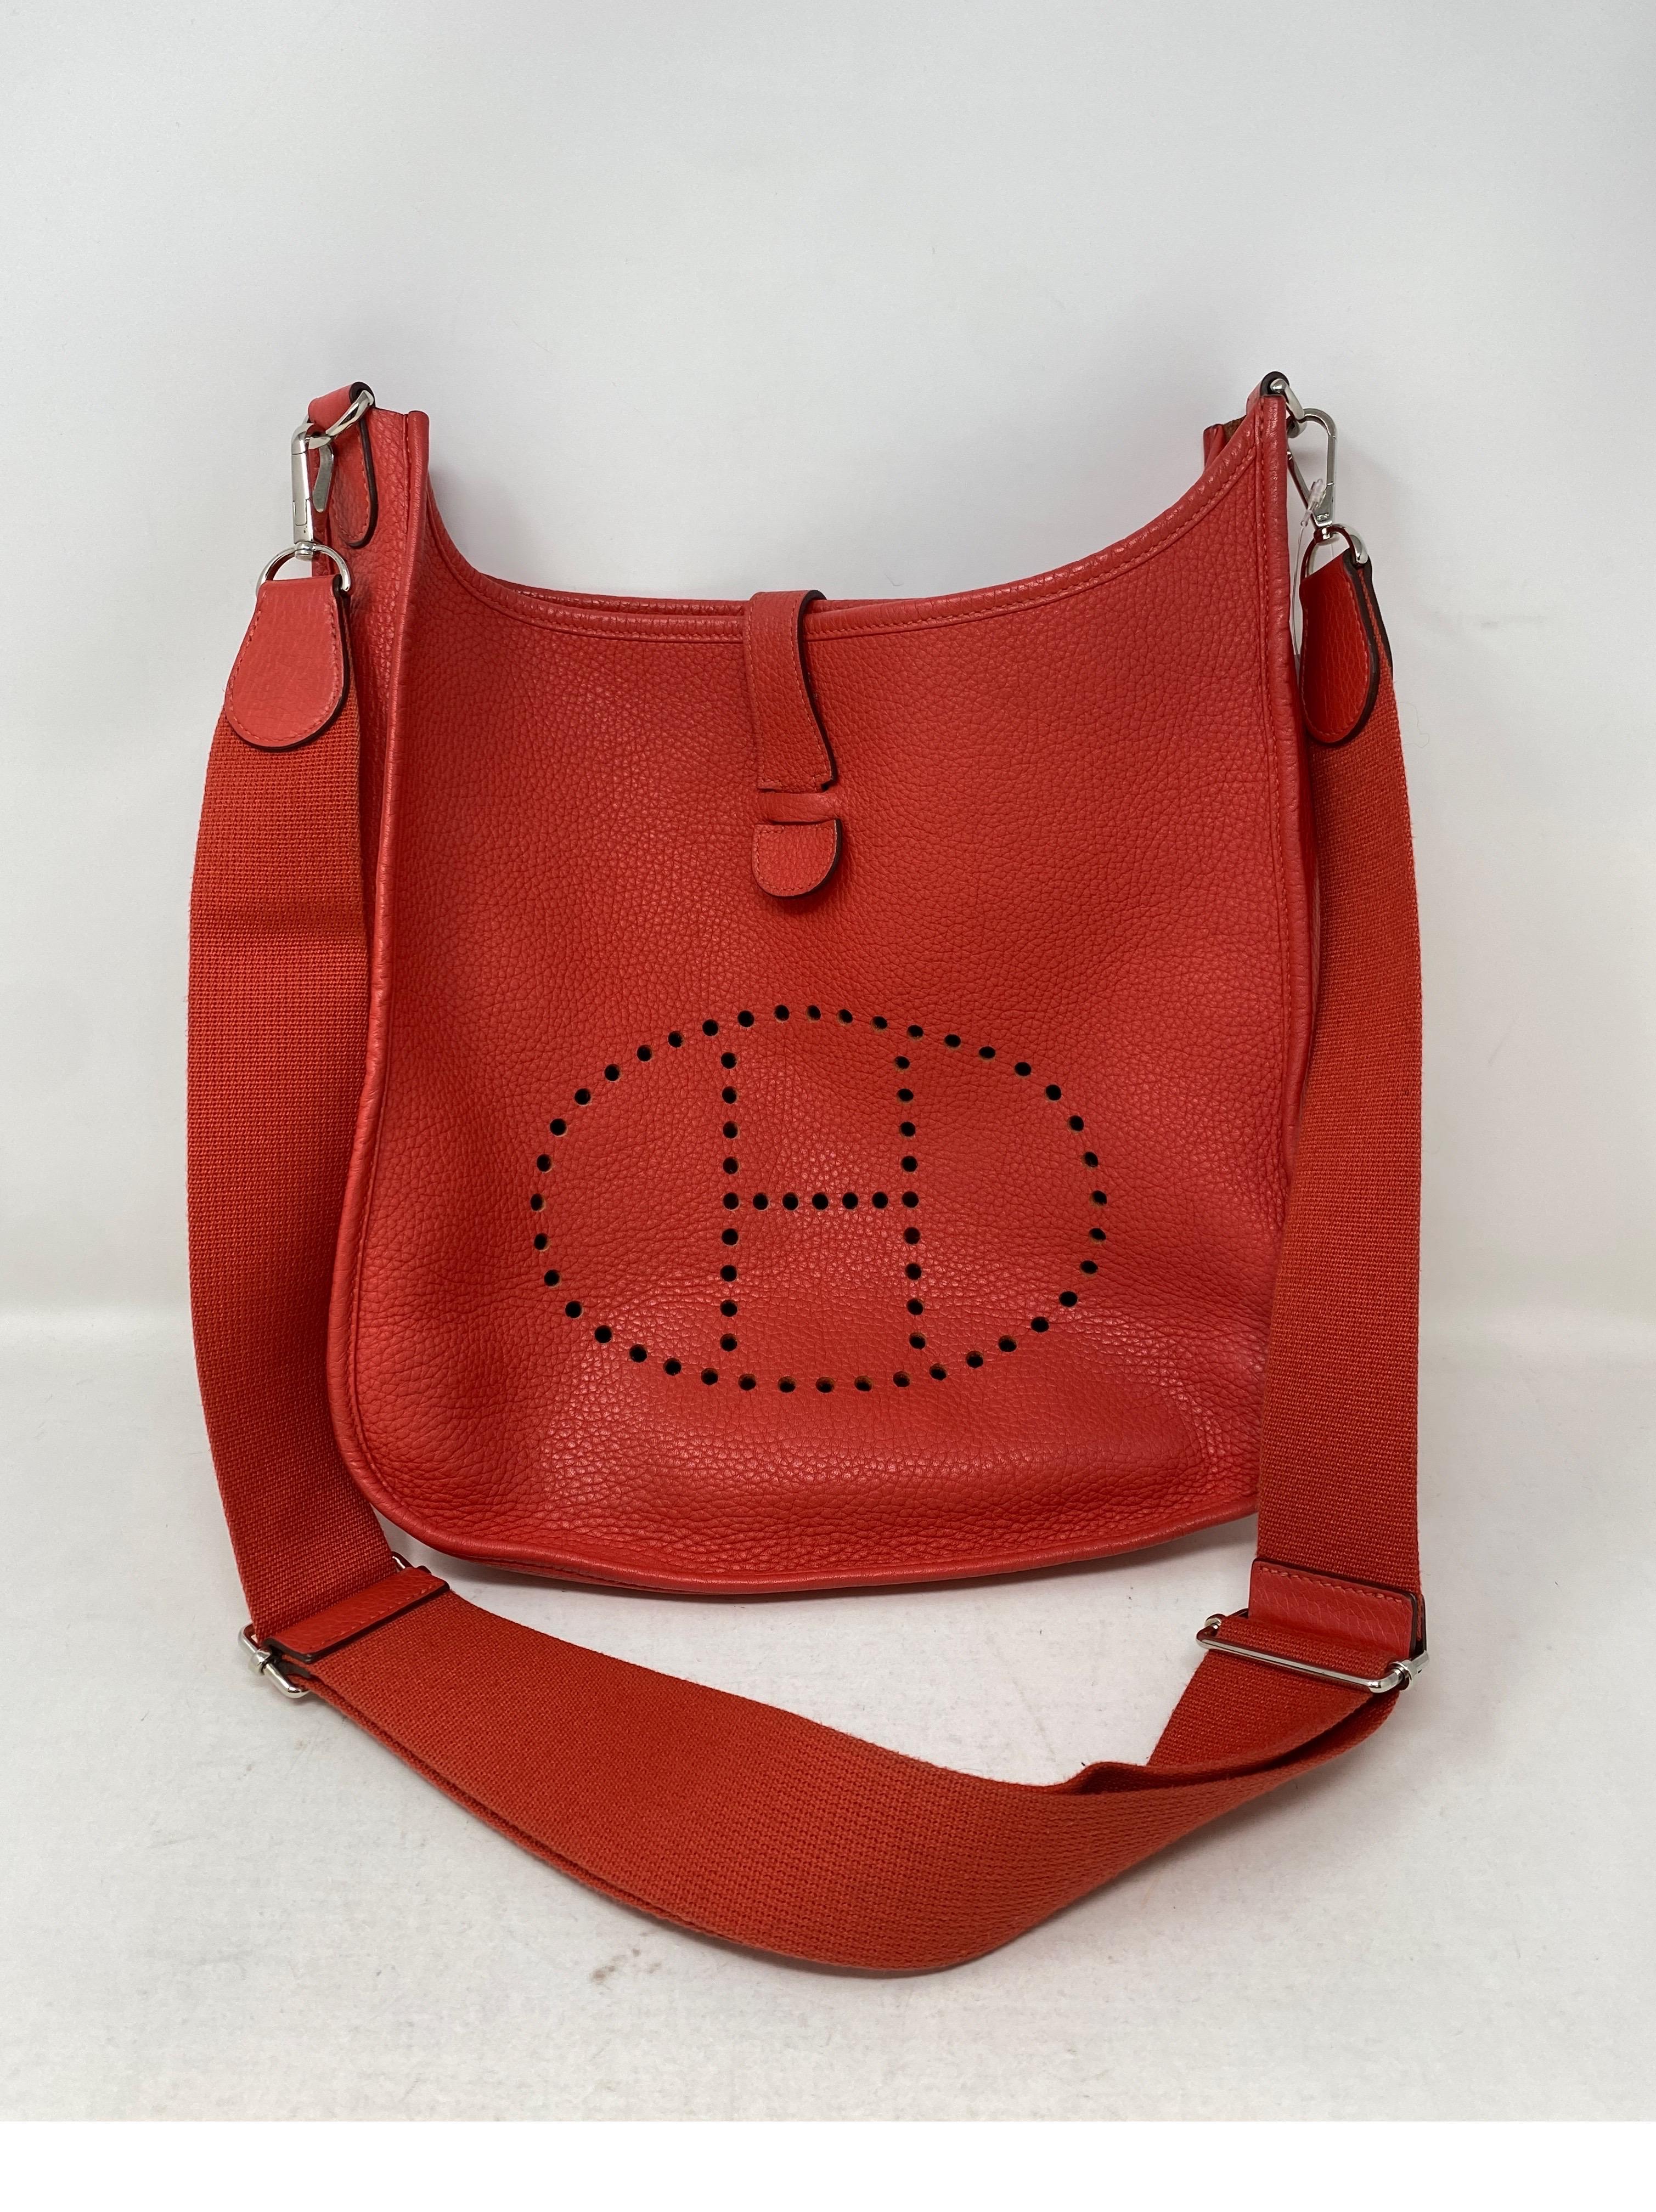 Hermes Rose Pivoine Evelyne GM Bag. Rosy salmon pink leather bag. Great crossbody or shoulder bag. Adjuastable strap. Bigger size. Good condition. Silver hardware. Guaranteed authentic. 